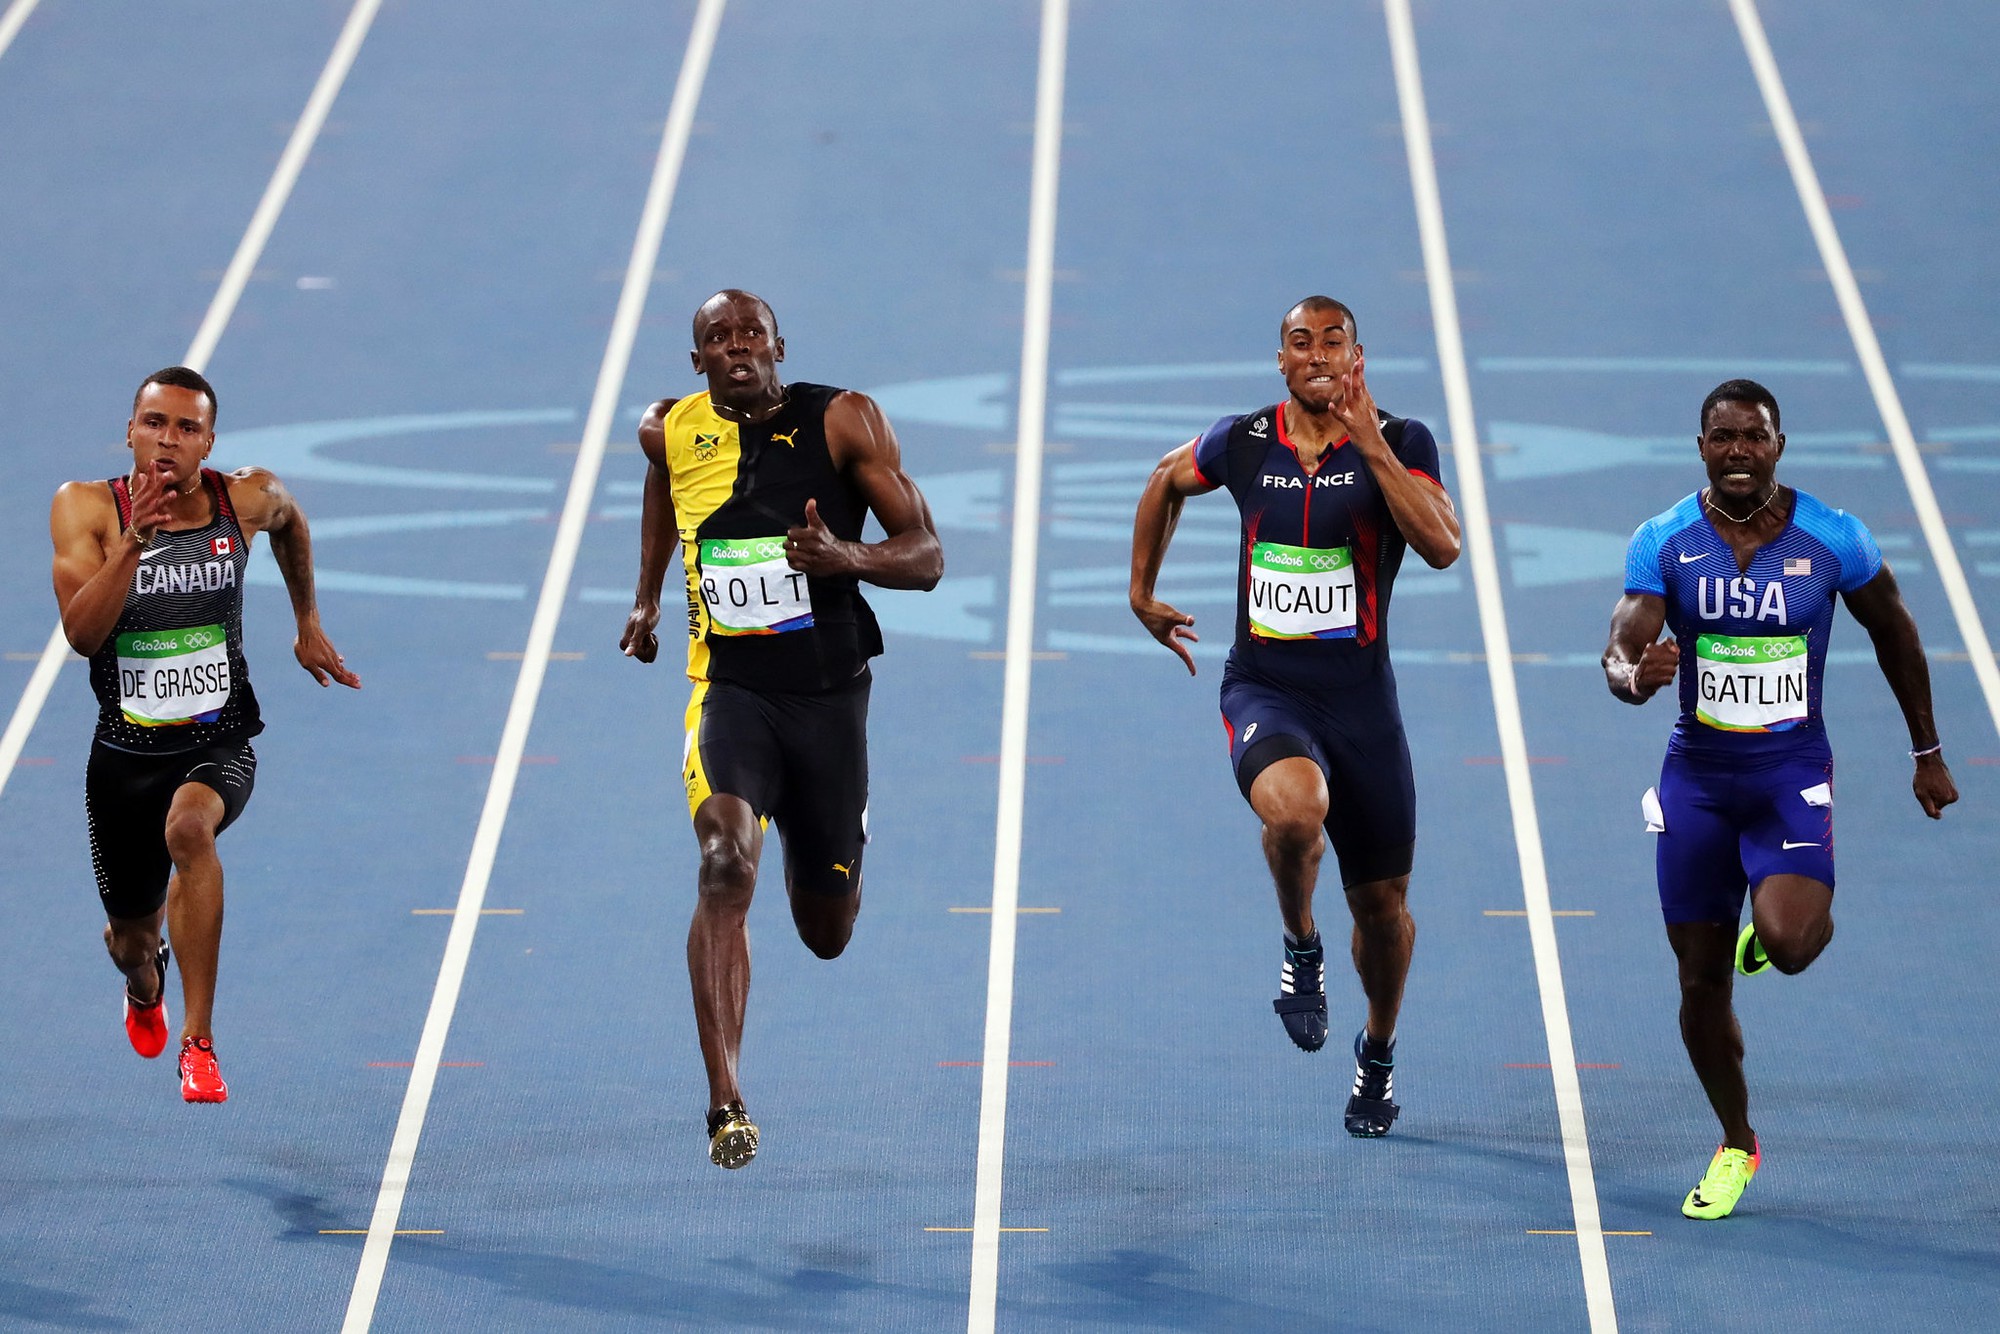 Thời điểm Gatlin bị Usain Bolt bắt kịp ở khoảng 60m